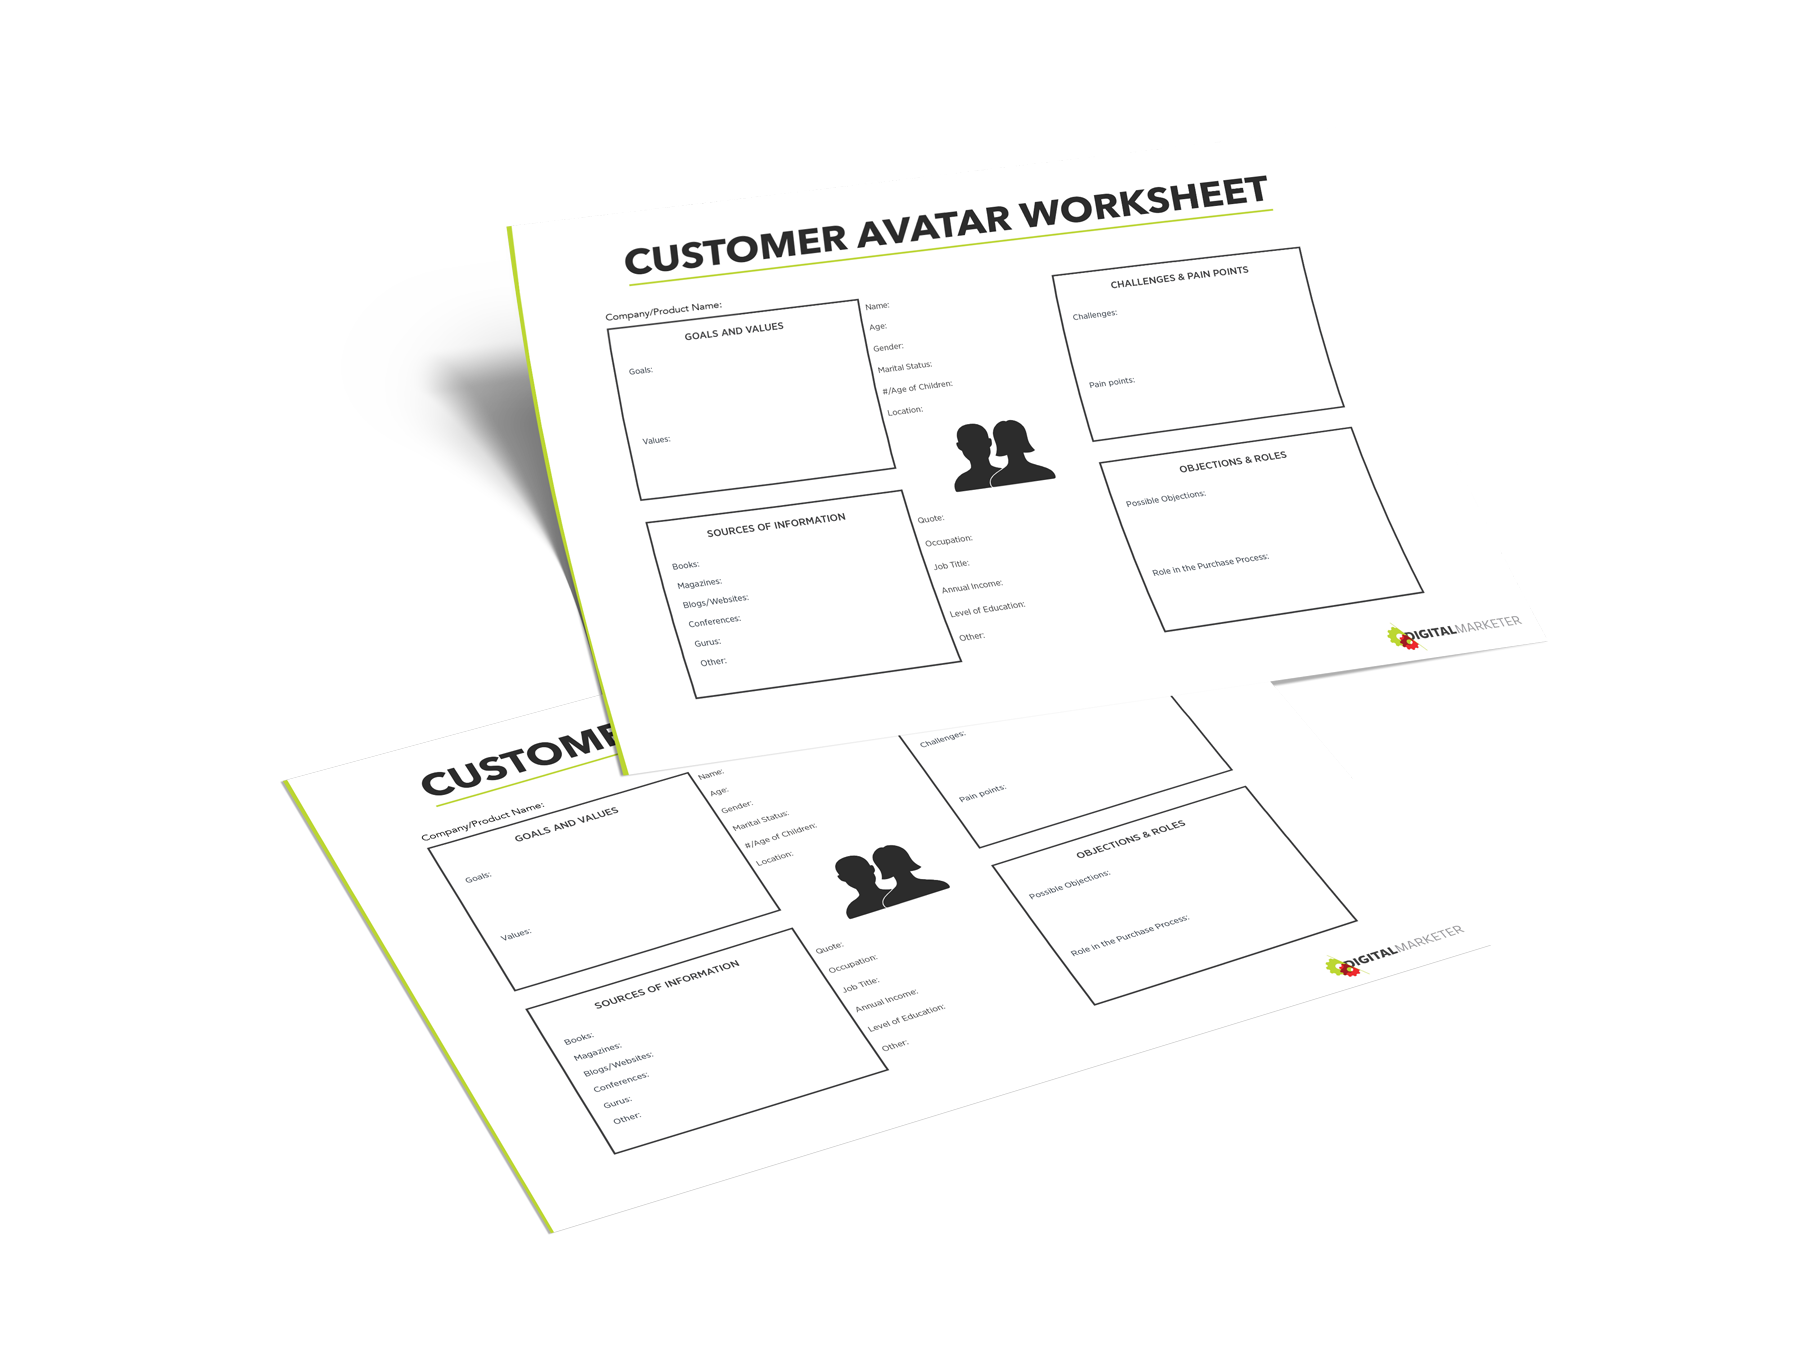 Download Your FREE Customer Avatar Worksheet